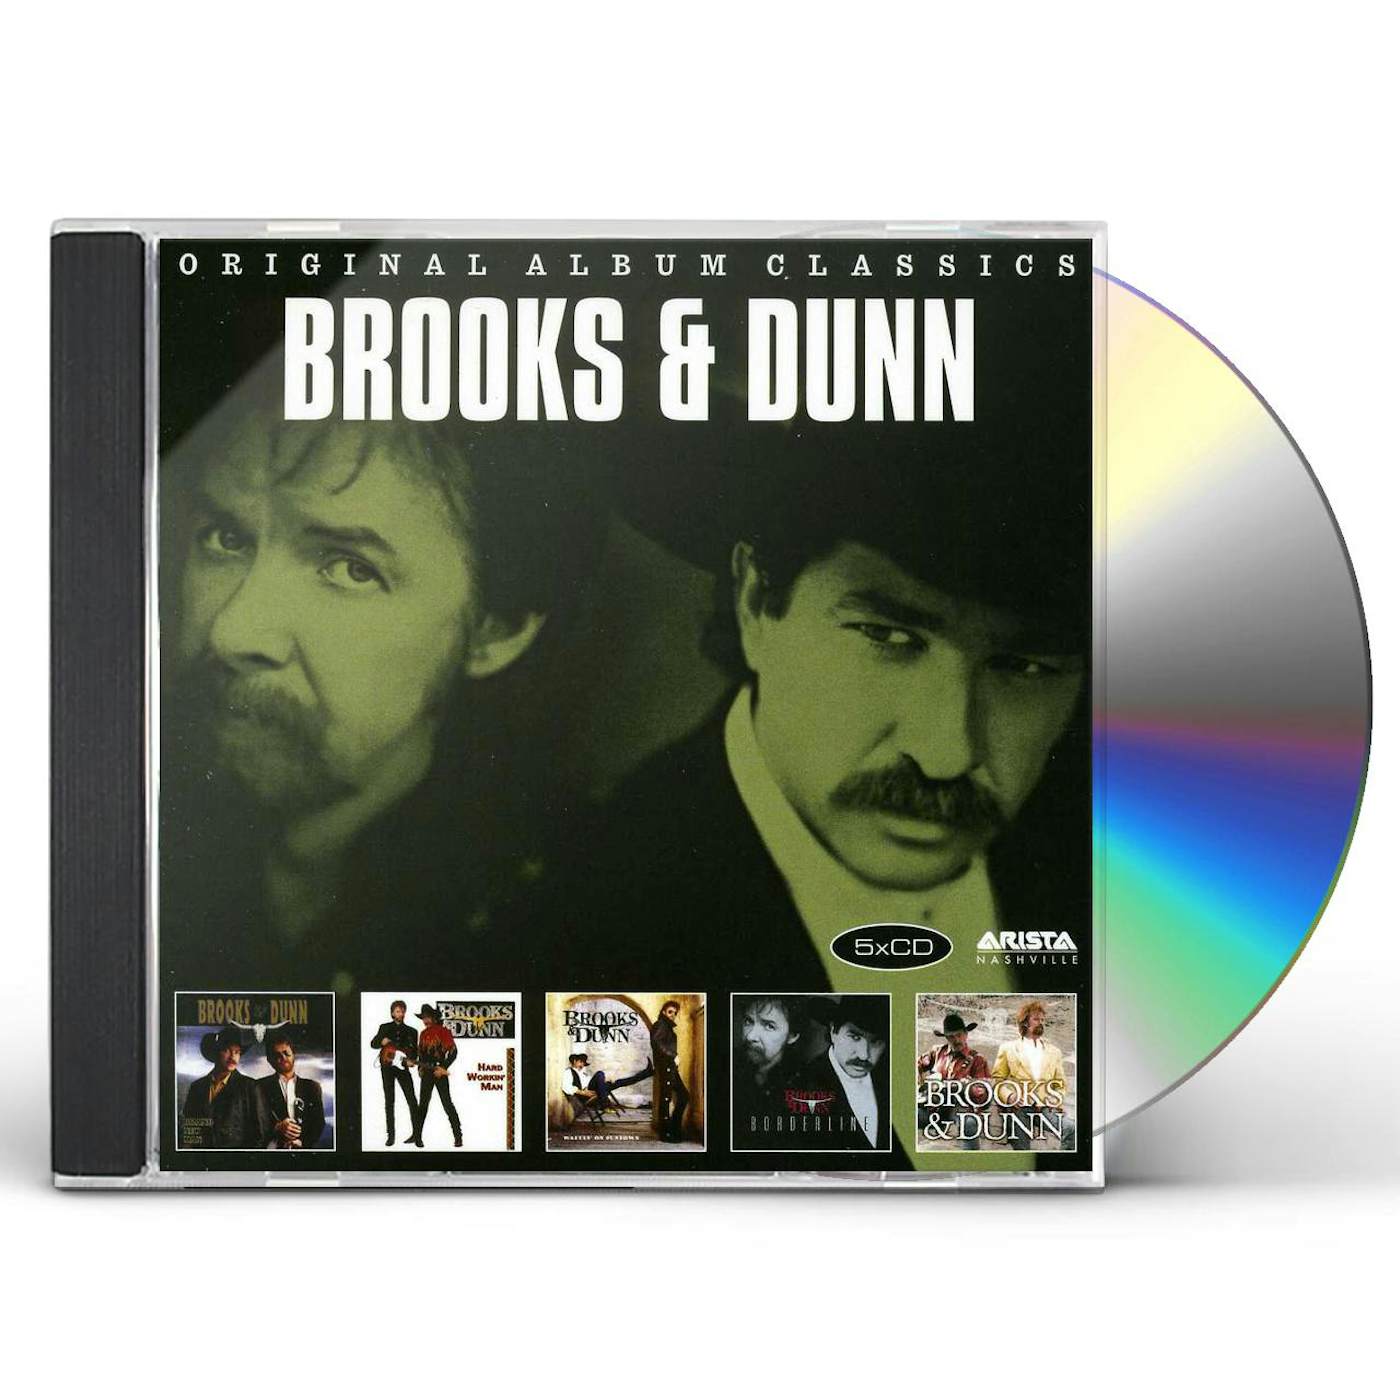 Brooks & Dunn ORIGINAL ALBUM CLASSICS 2 CD